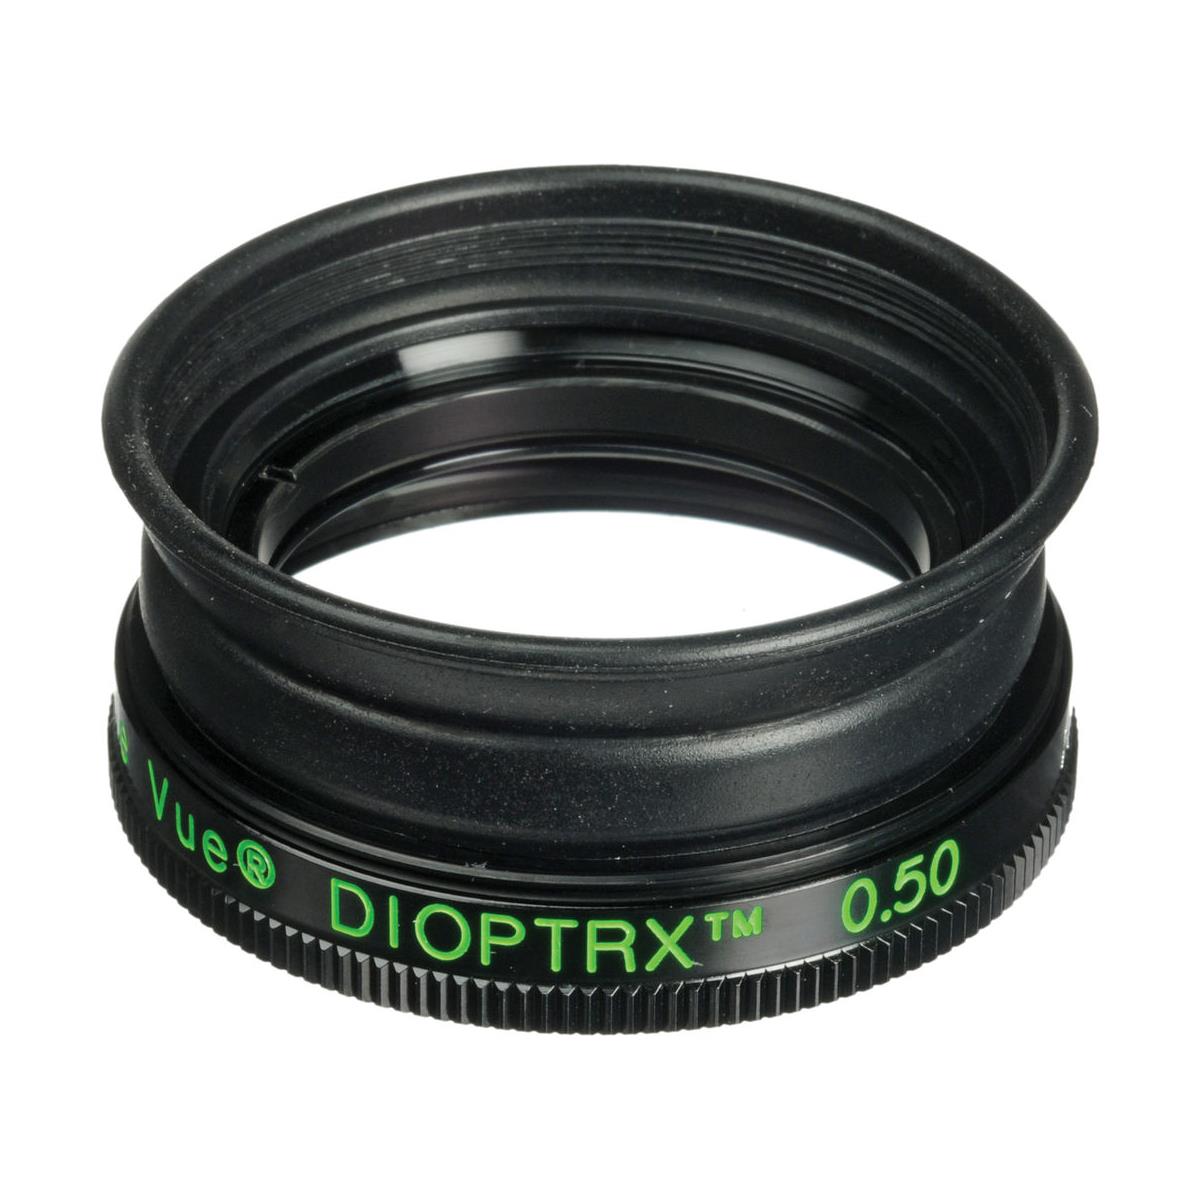 Image of Tele Vue Dioptrx Astigmatism Correcting Lens - 0.50